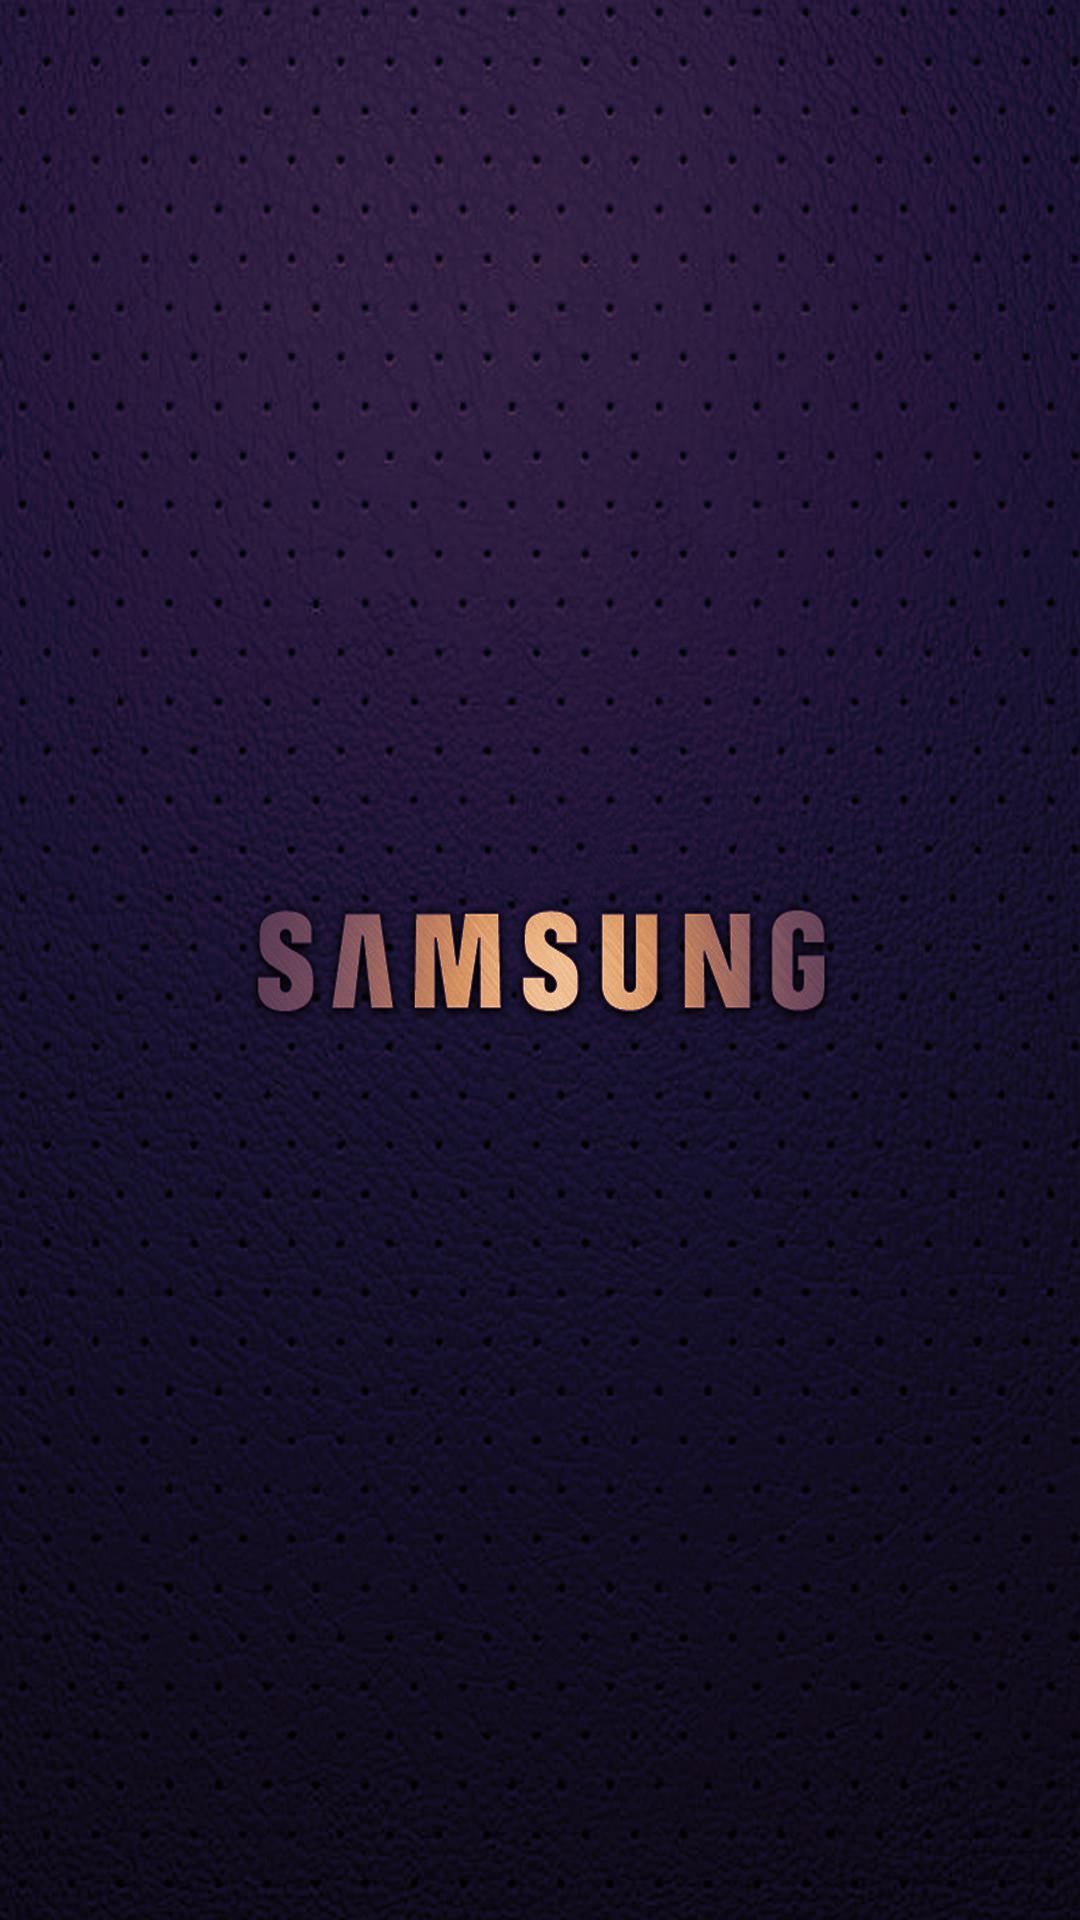 [67+] Samsung Logo Wallpaper on WallpaperSafari